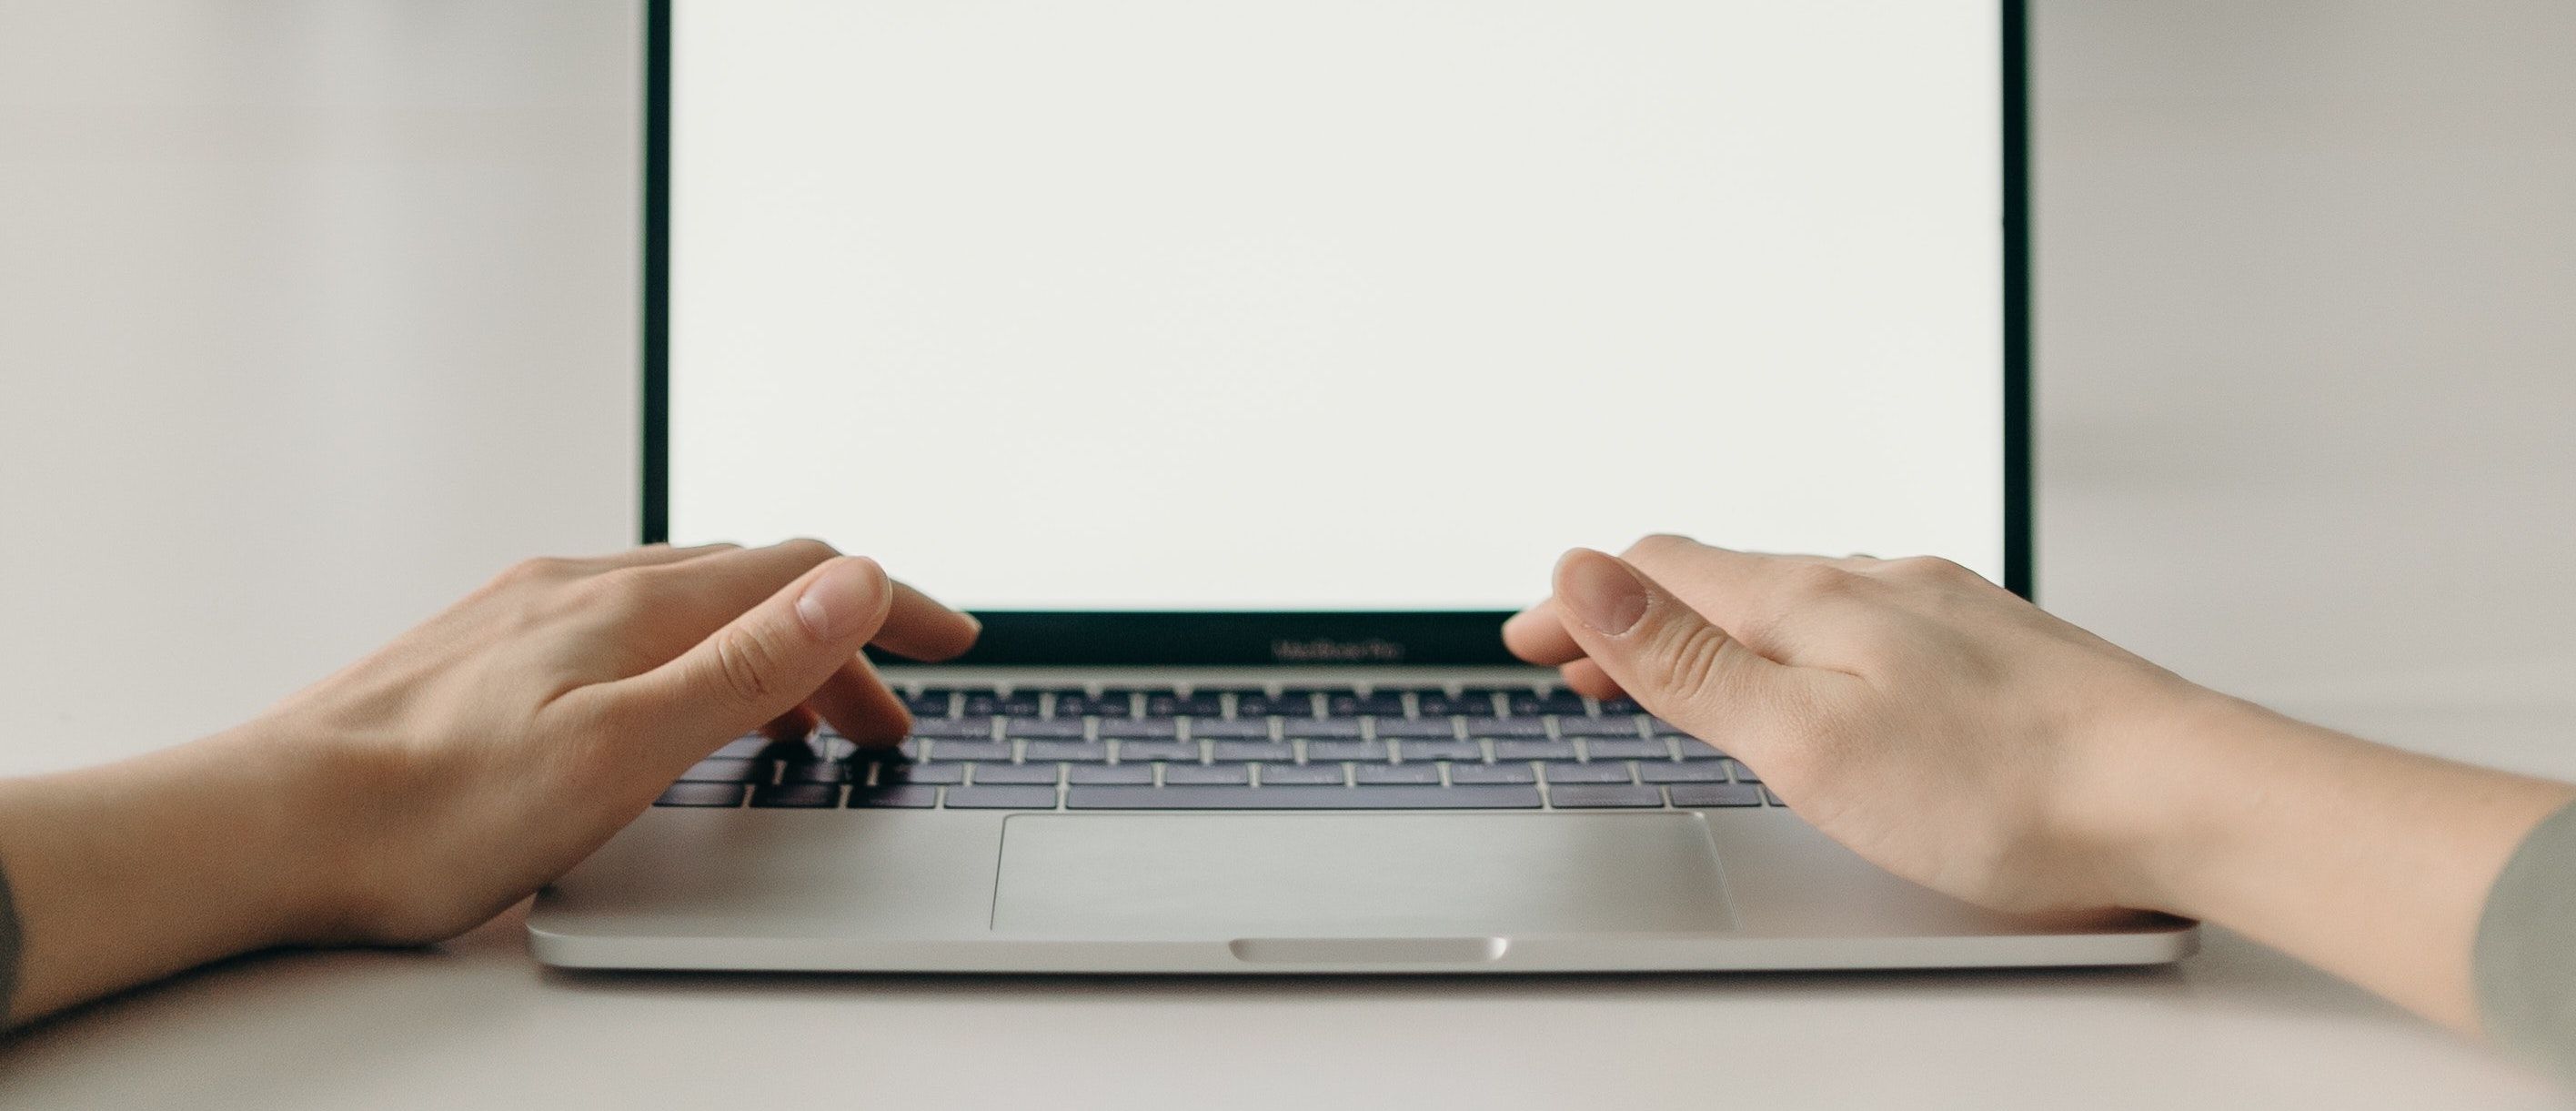 Hands typing on MacBook Pro keyboard